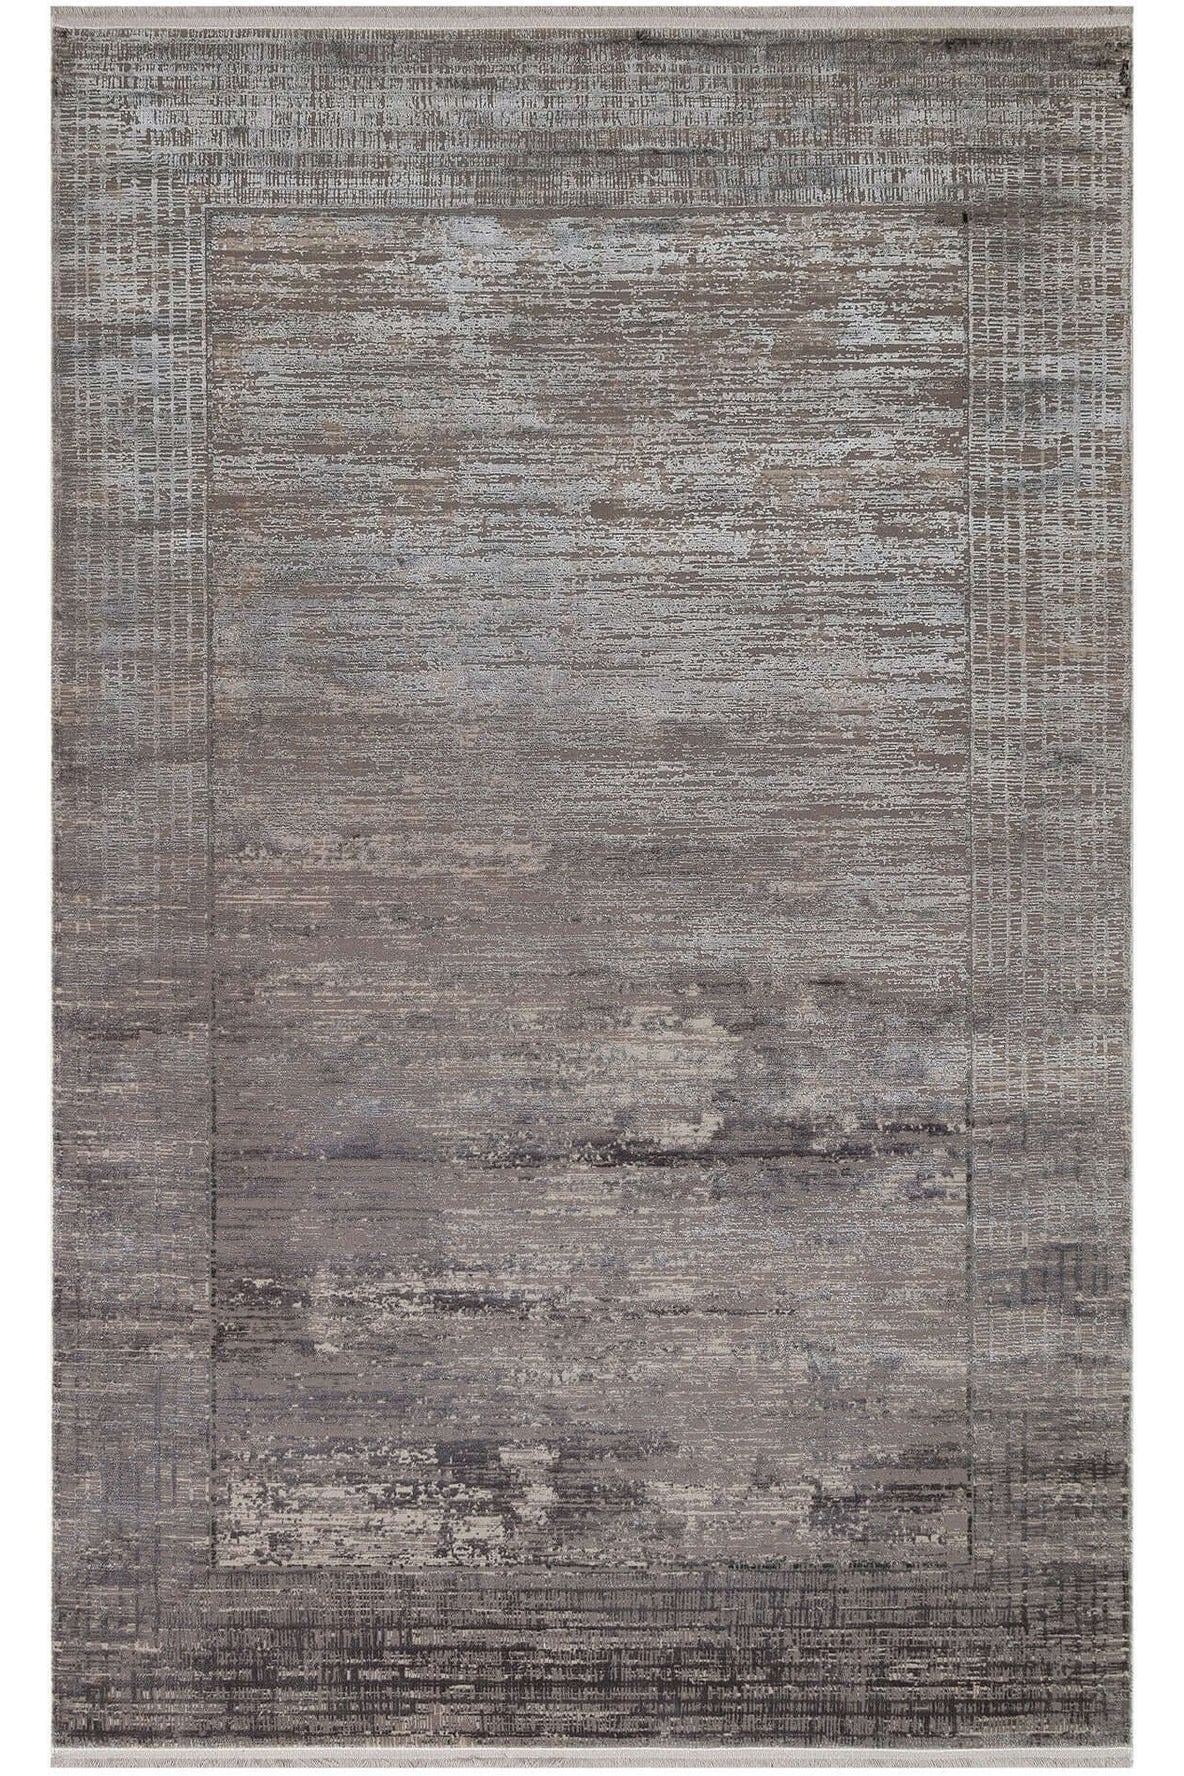 #Turkish_Carpets_Rugs# #Modern_Carpets# #Abrash_Carpets#Fsd 02 D.Grey